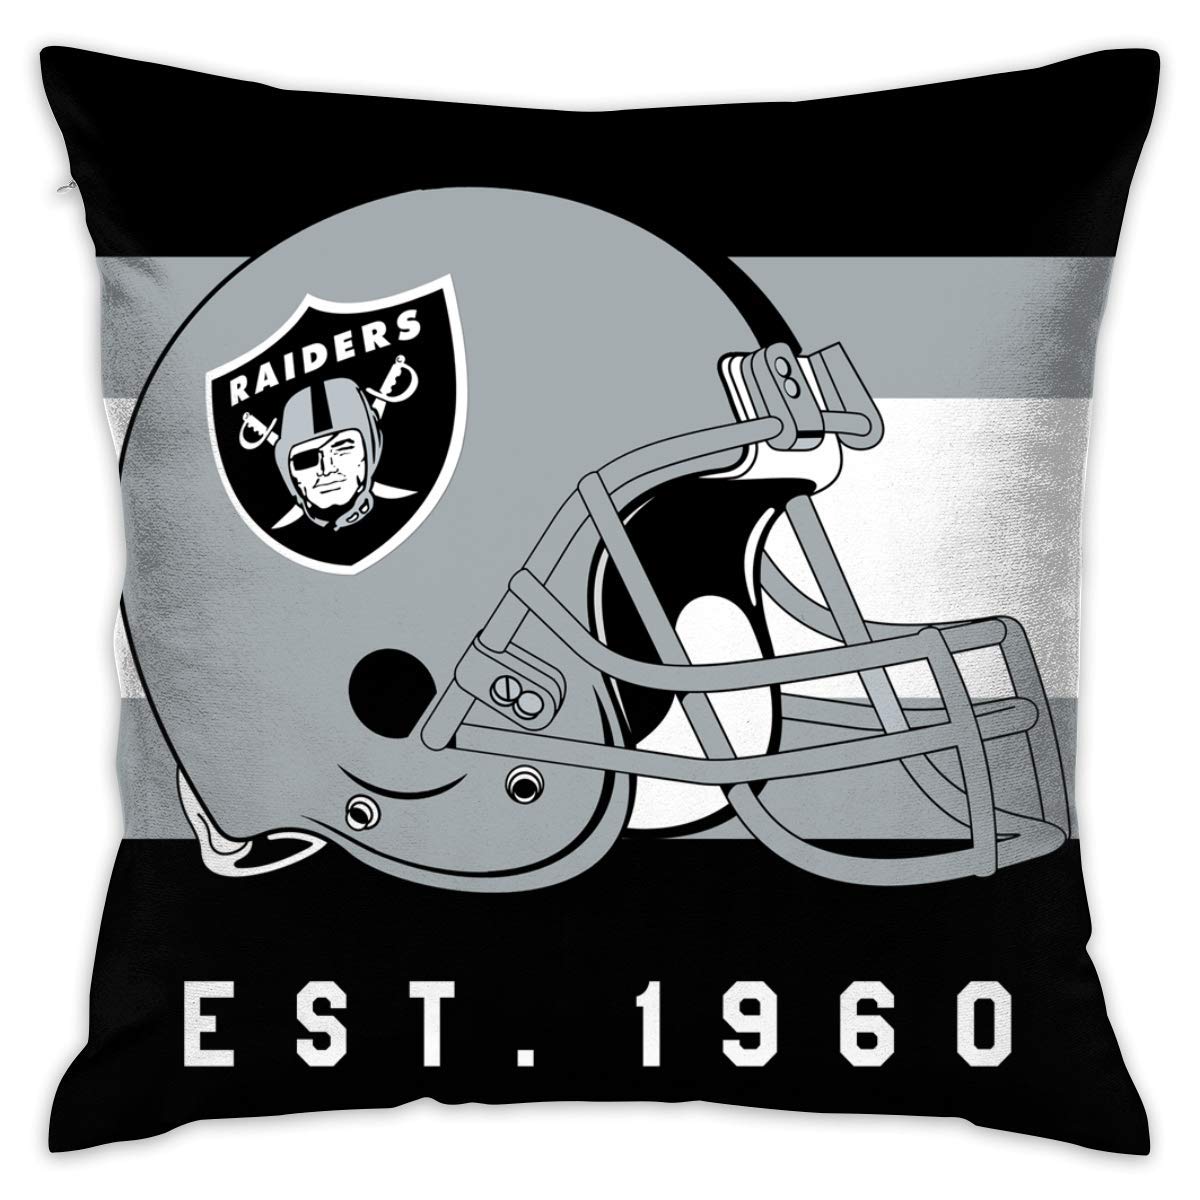 Personalized Football Las Vegas Raiders Design Pillowcase Decorative Throw Pillow Cover